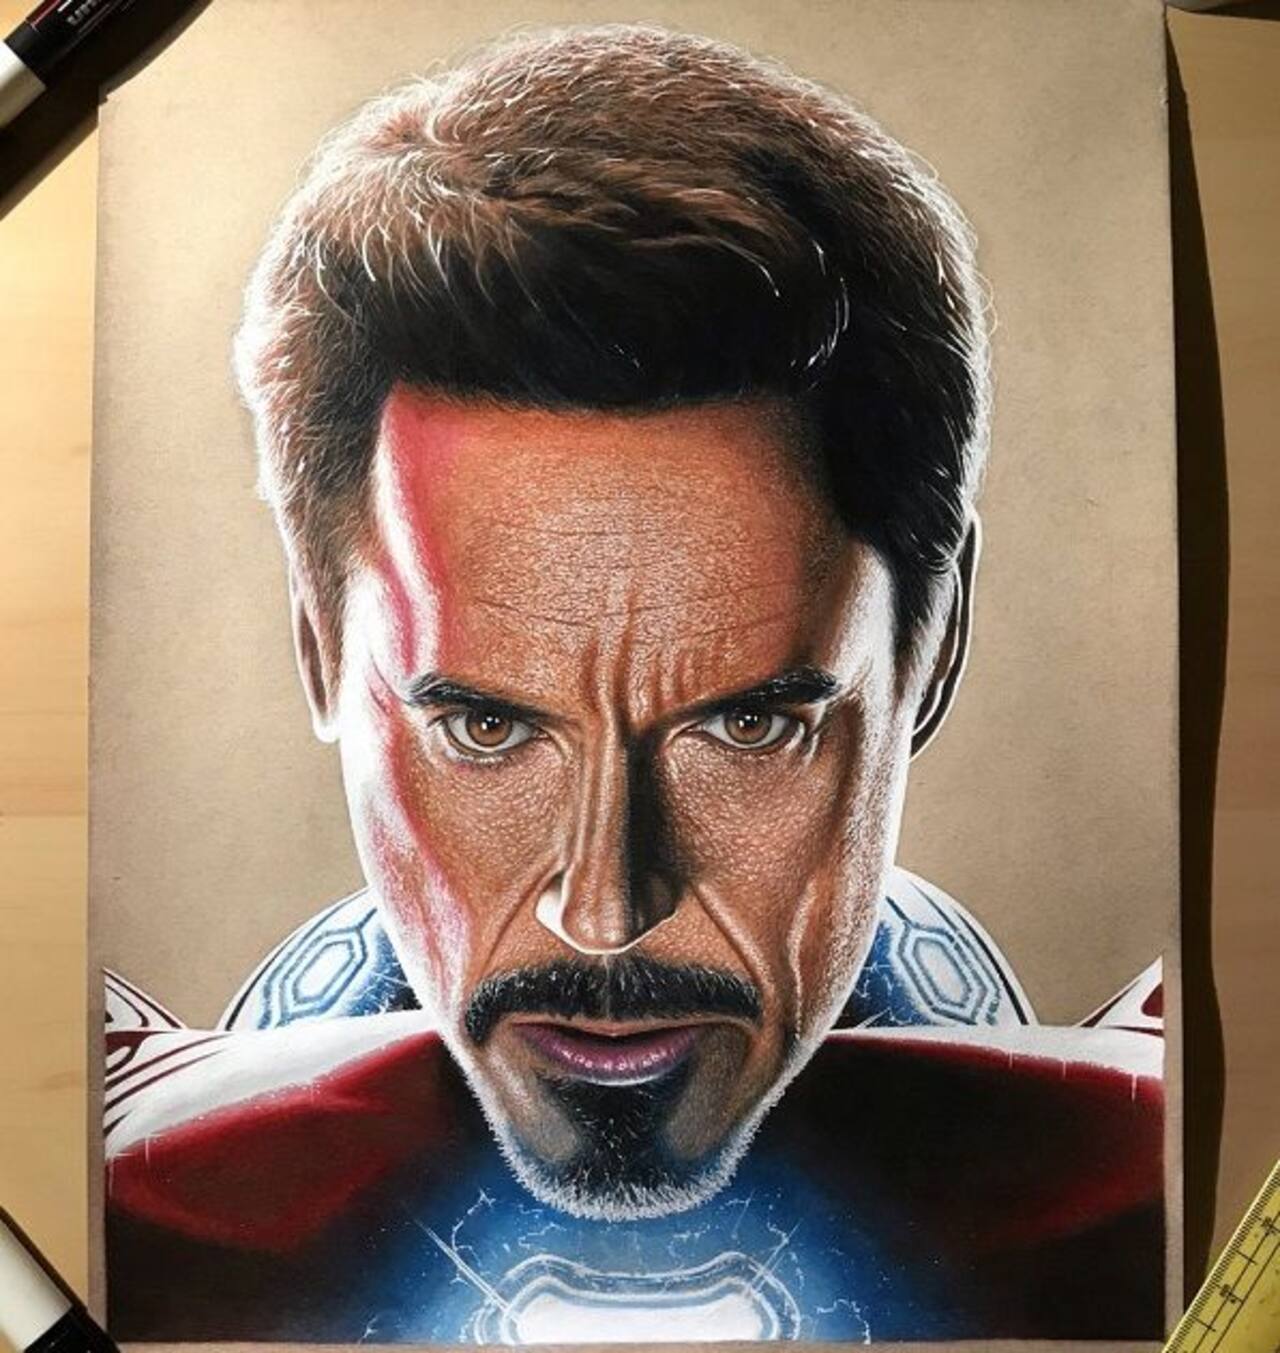 Tony Stark aka Robert Downey Jr's portrait by London based Gurekbal Bhachu goes viral